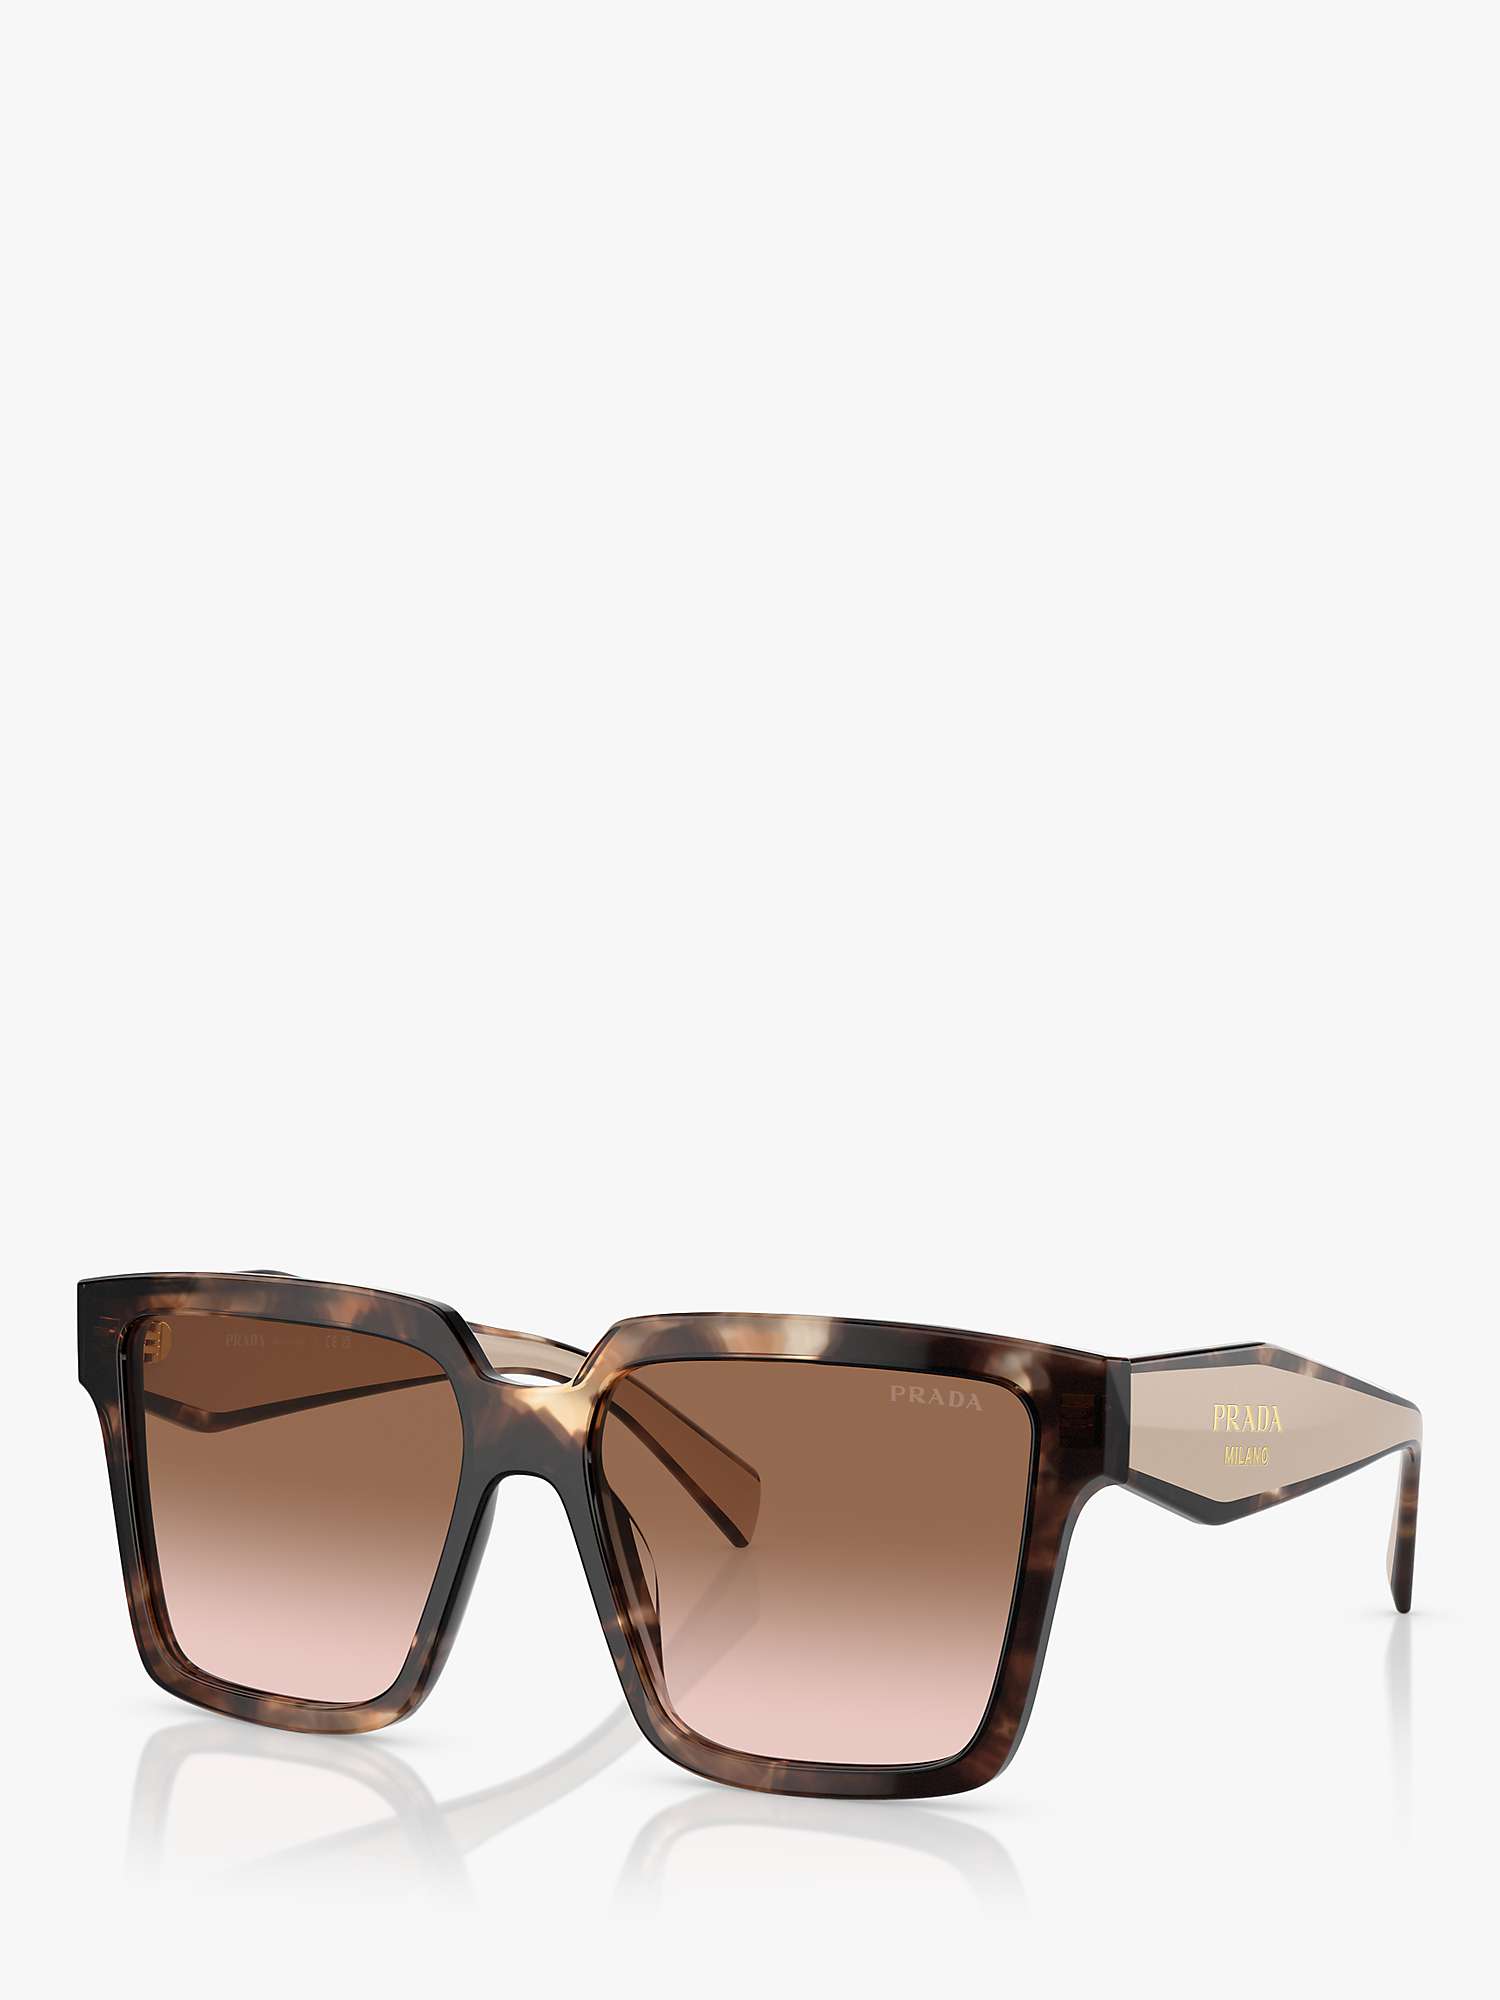 Buy Prada PR24ZS Women's Rectangular Sunglasses, Caramel Tortoise Online at johnlewis.com